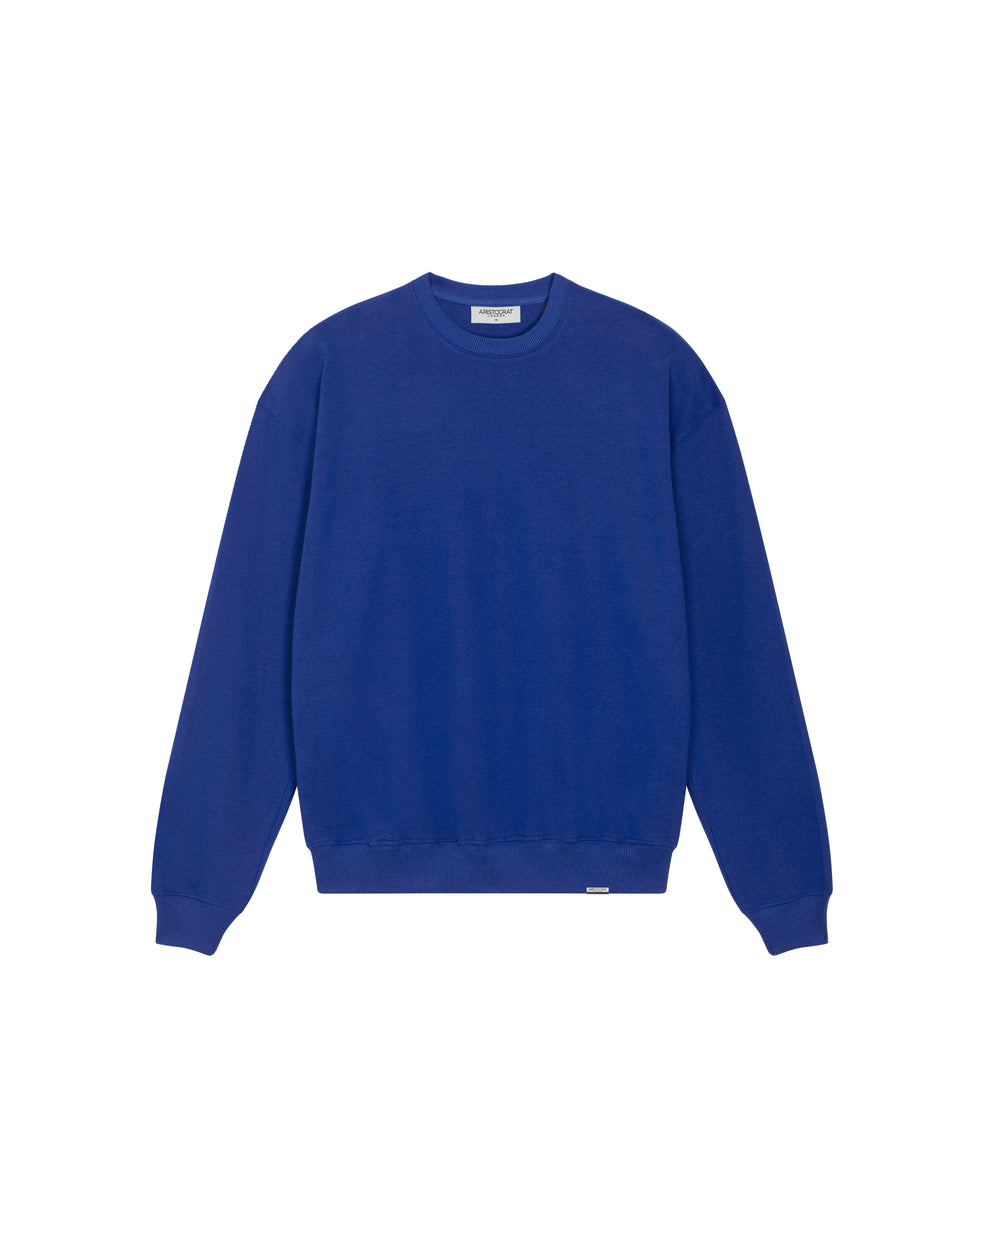 Essential Sweater - Cobalt Blue